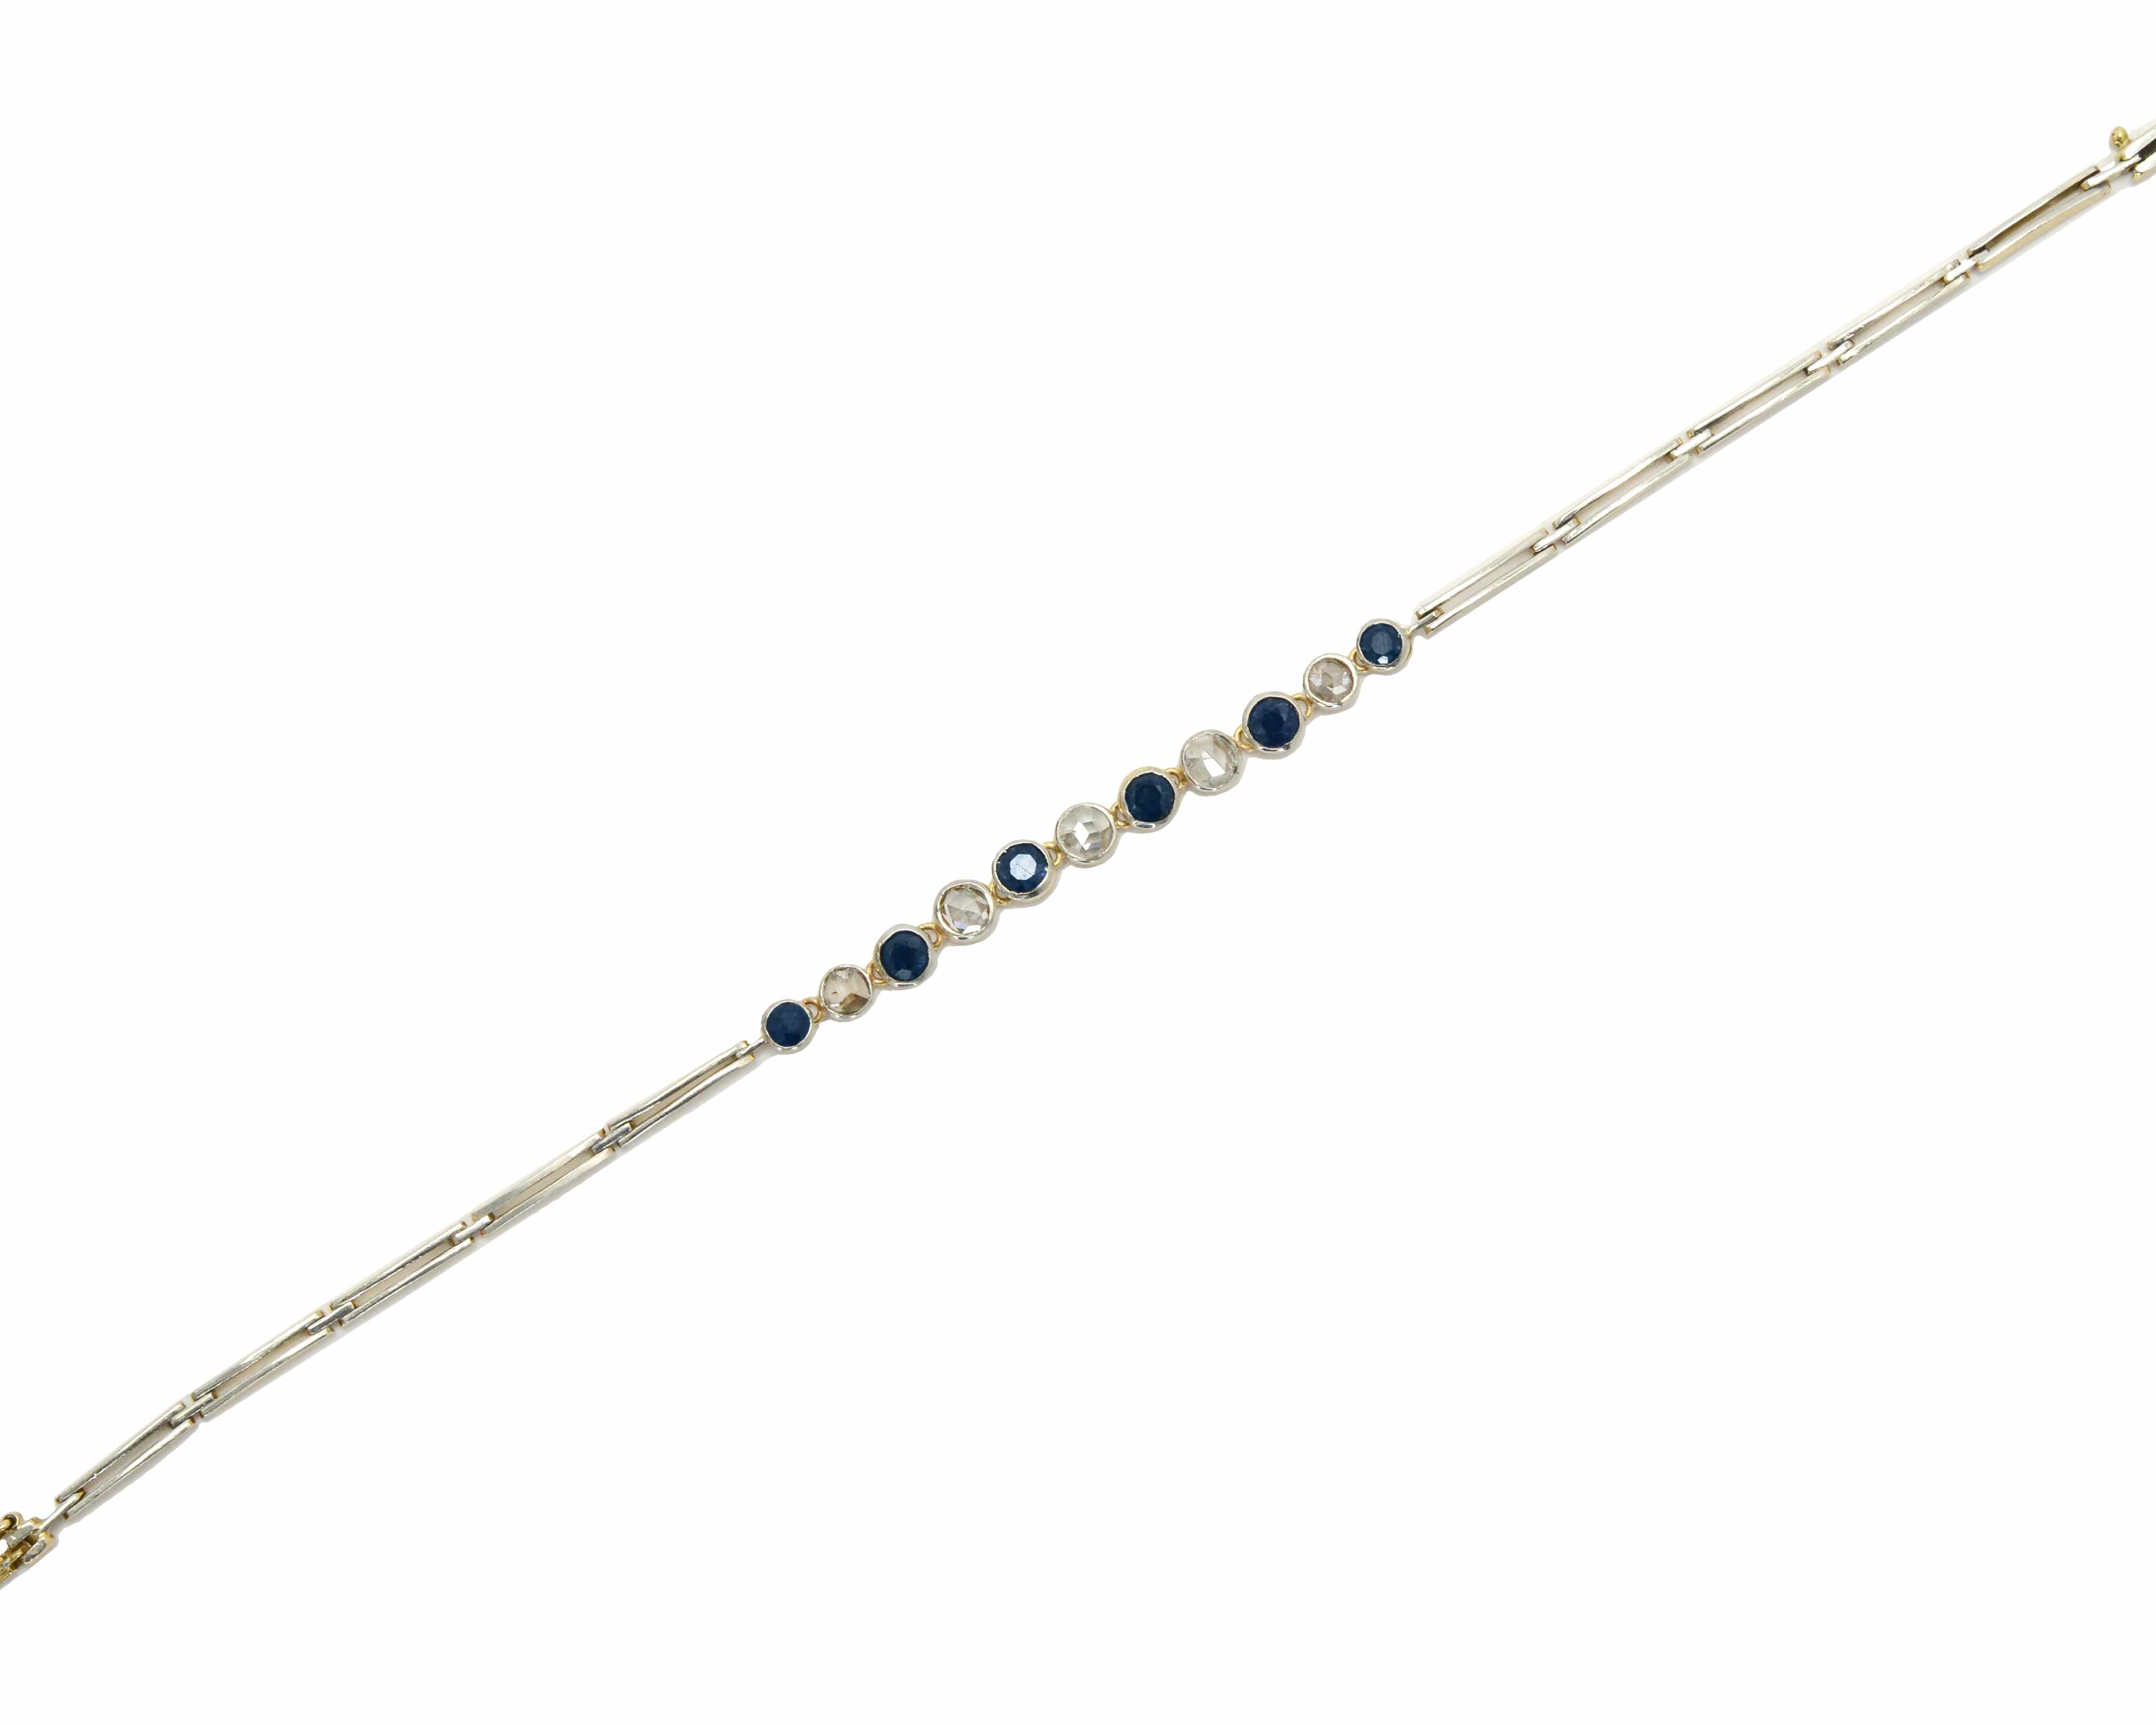 A 2 tone antique link bracelet with blue sapphires and diamonds.